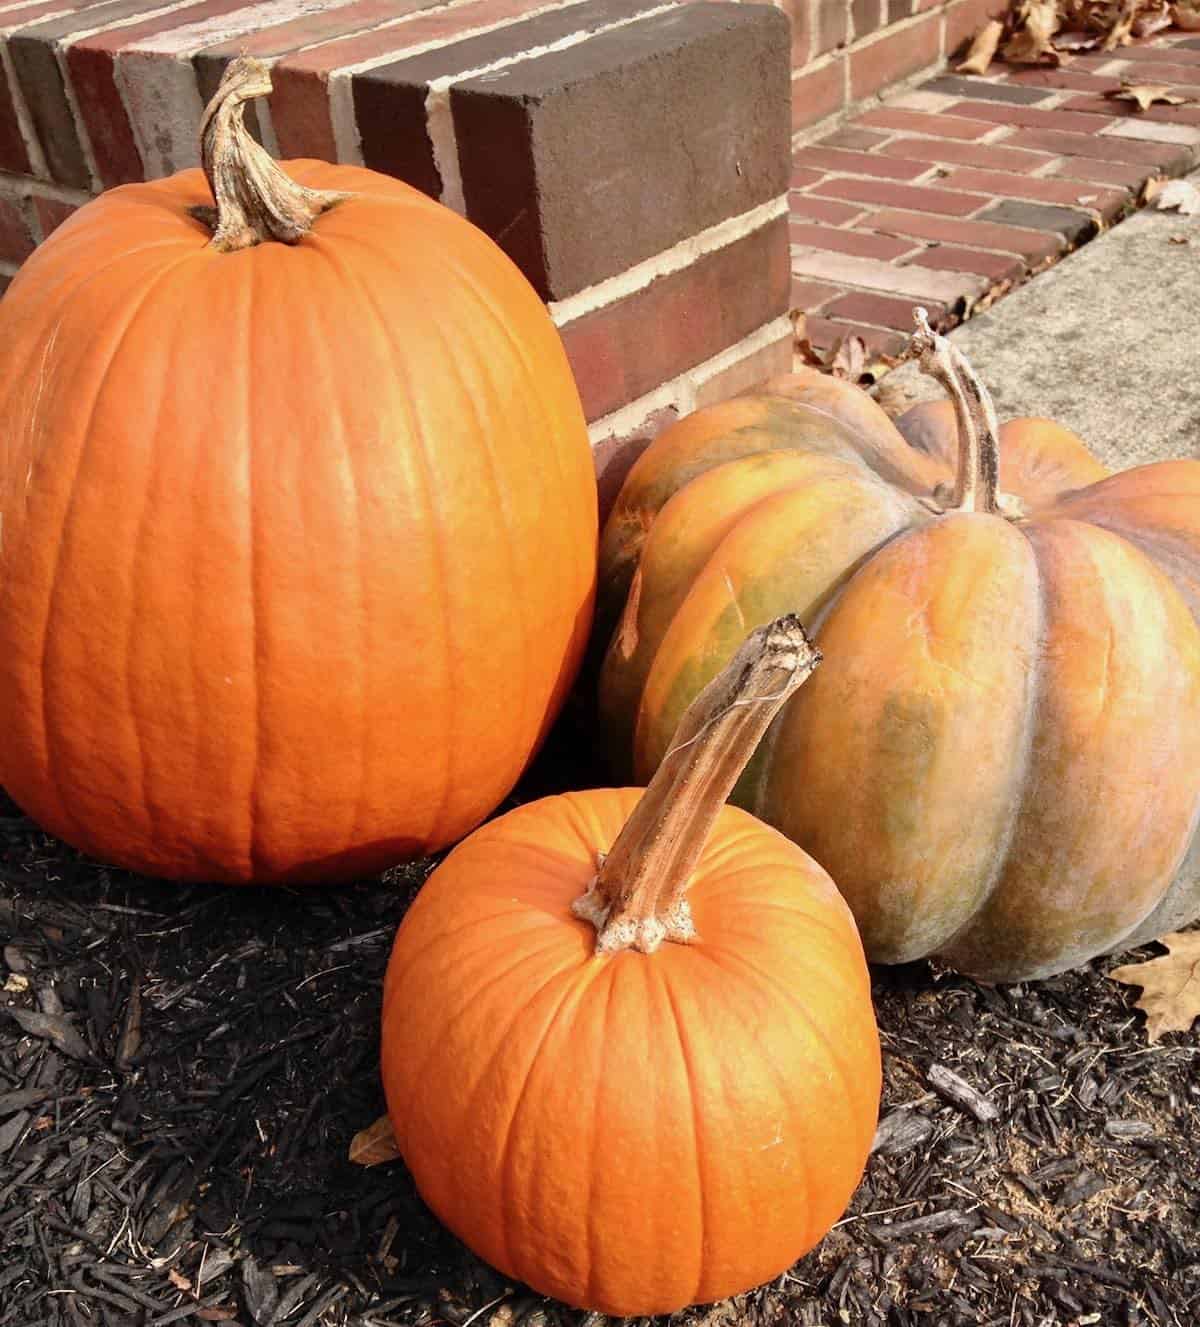 Loss and gratitude for garden pumpkins.